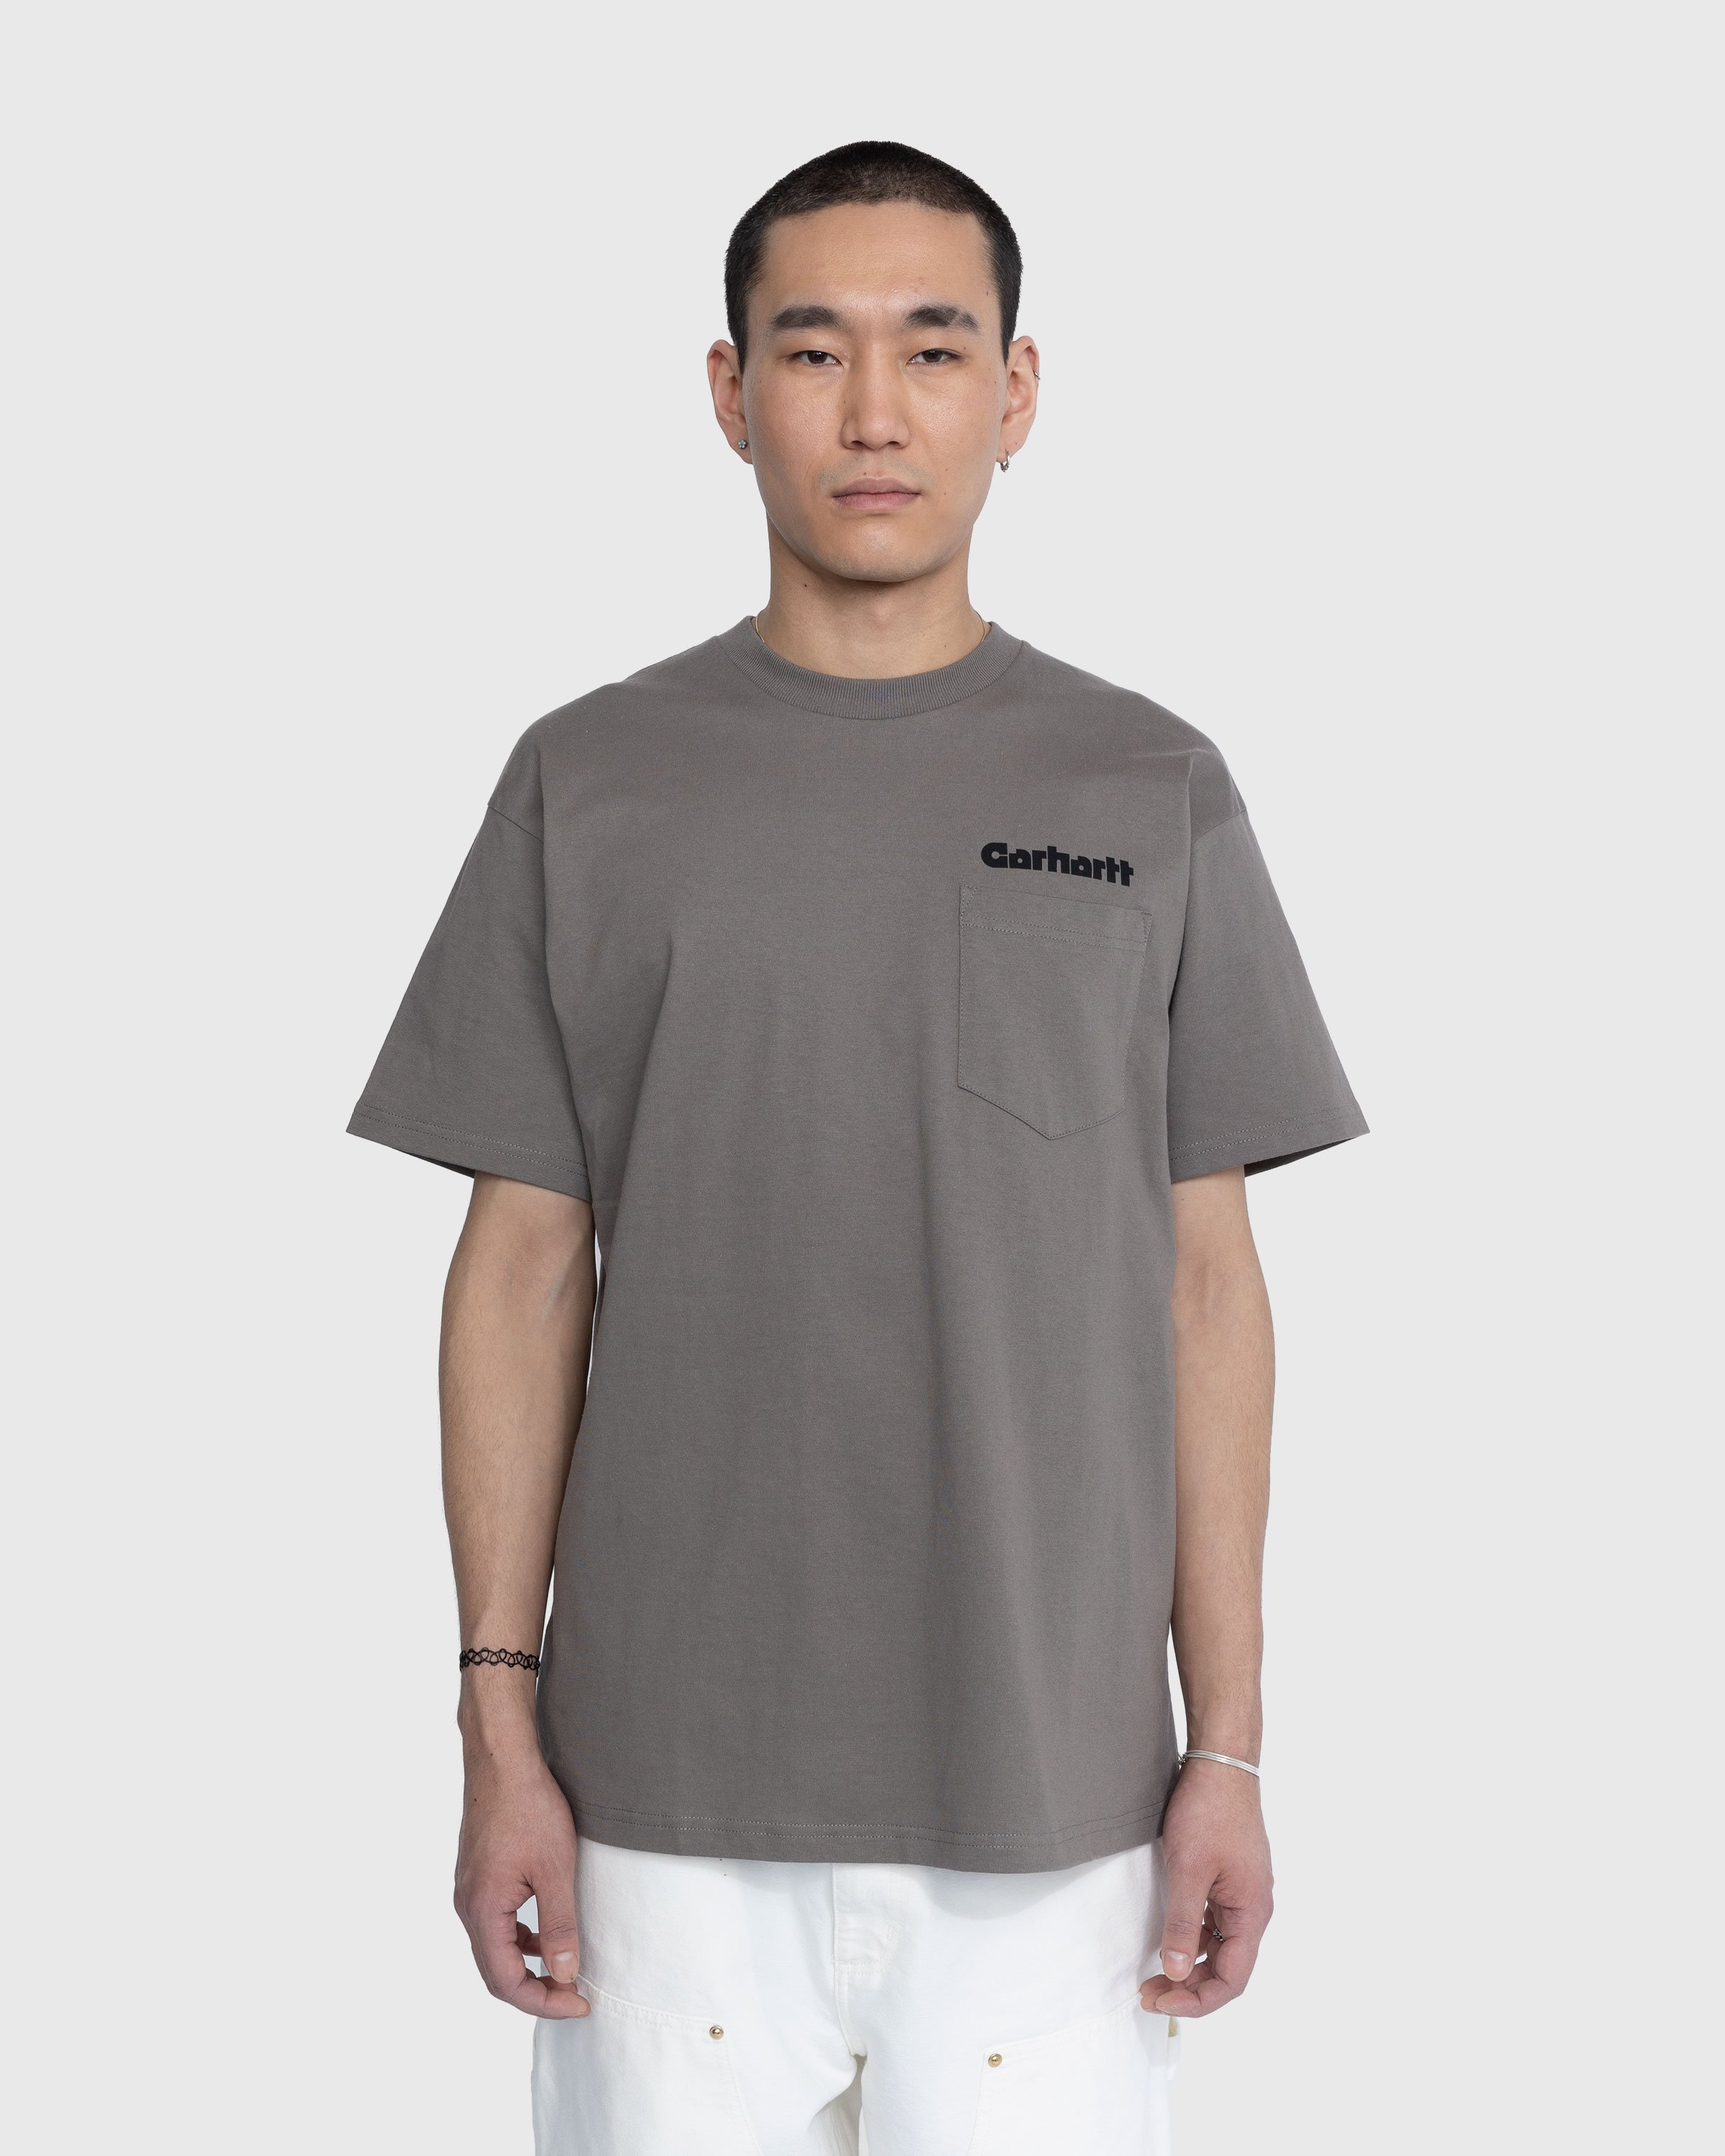 Carhartt WIP - Innovation Pocket T-Shirt Teide - Clothing - Green - Image 3